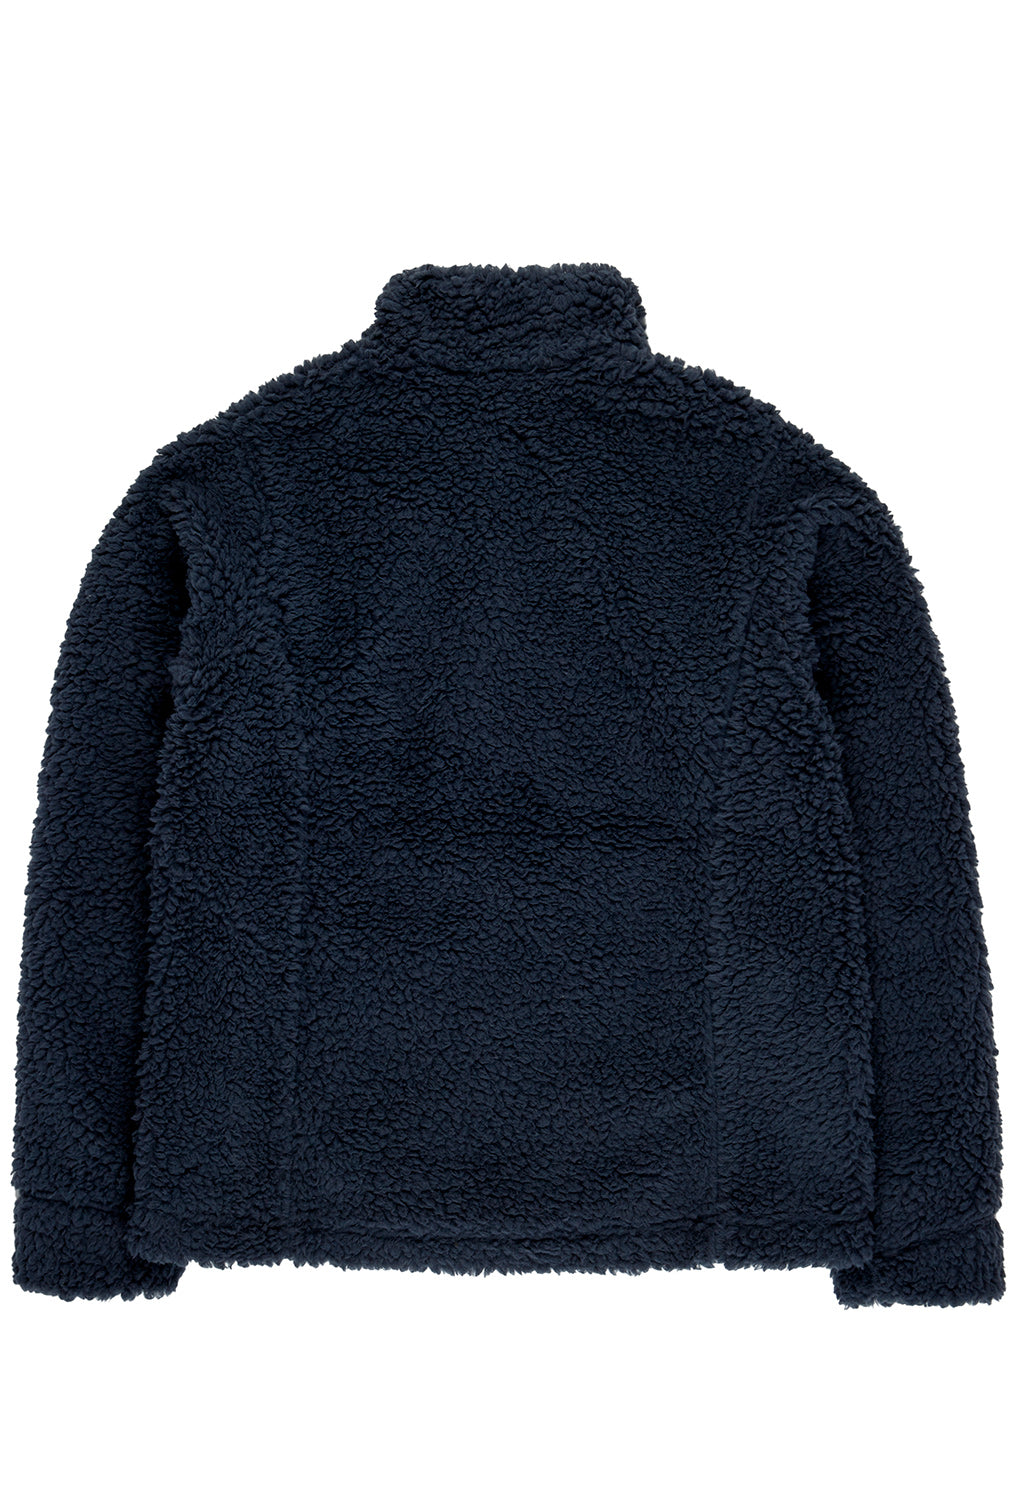 Montbell Women's Climaplus Shearling Jacket - Dark Grey